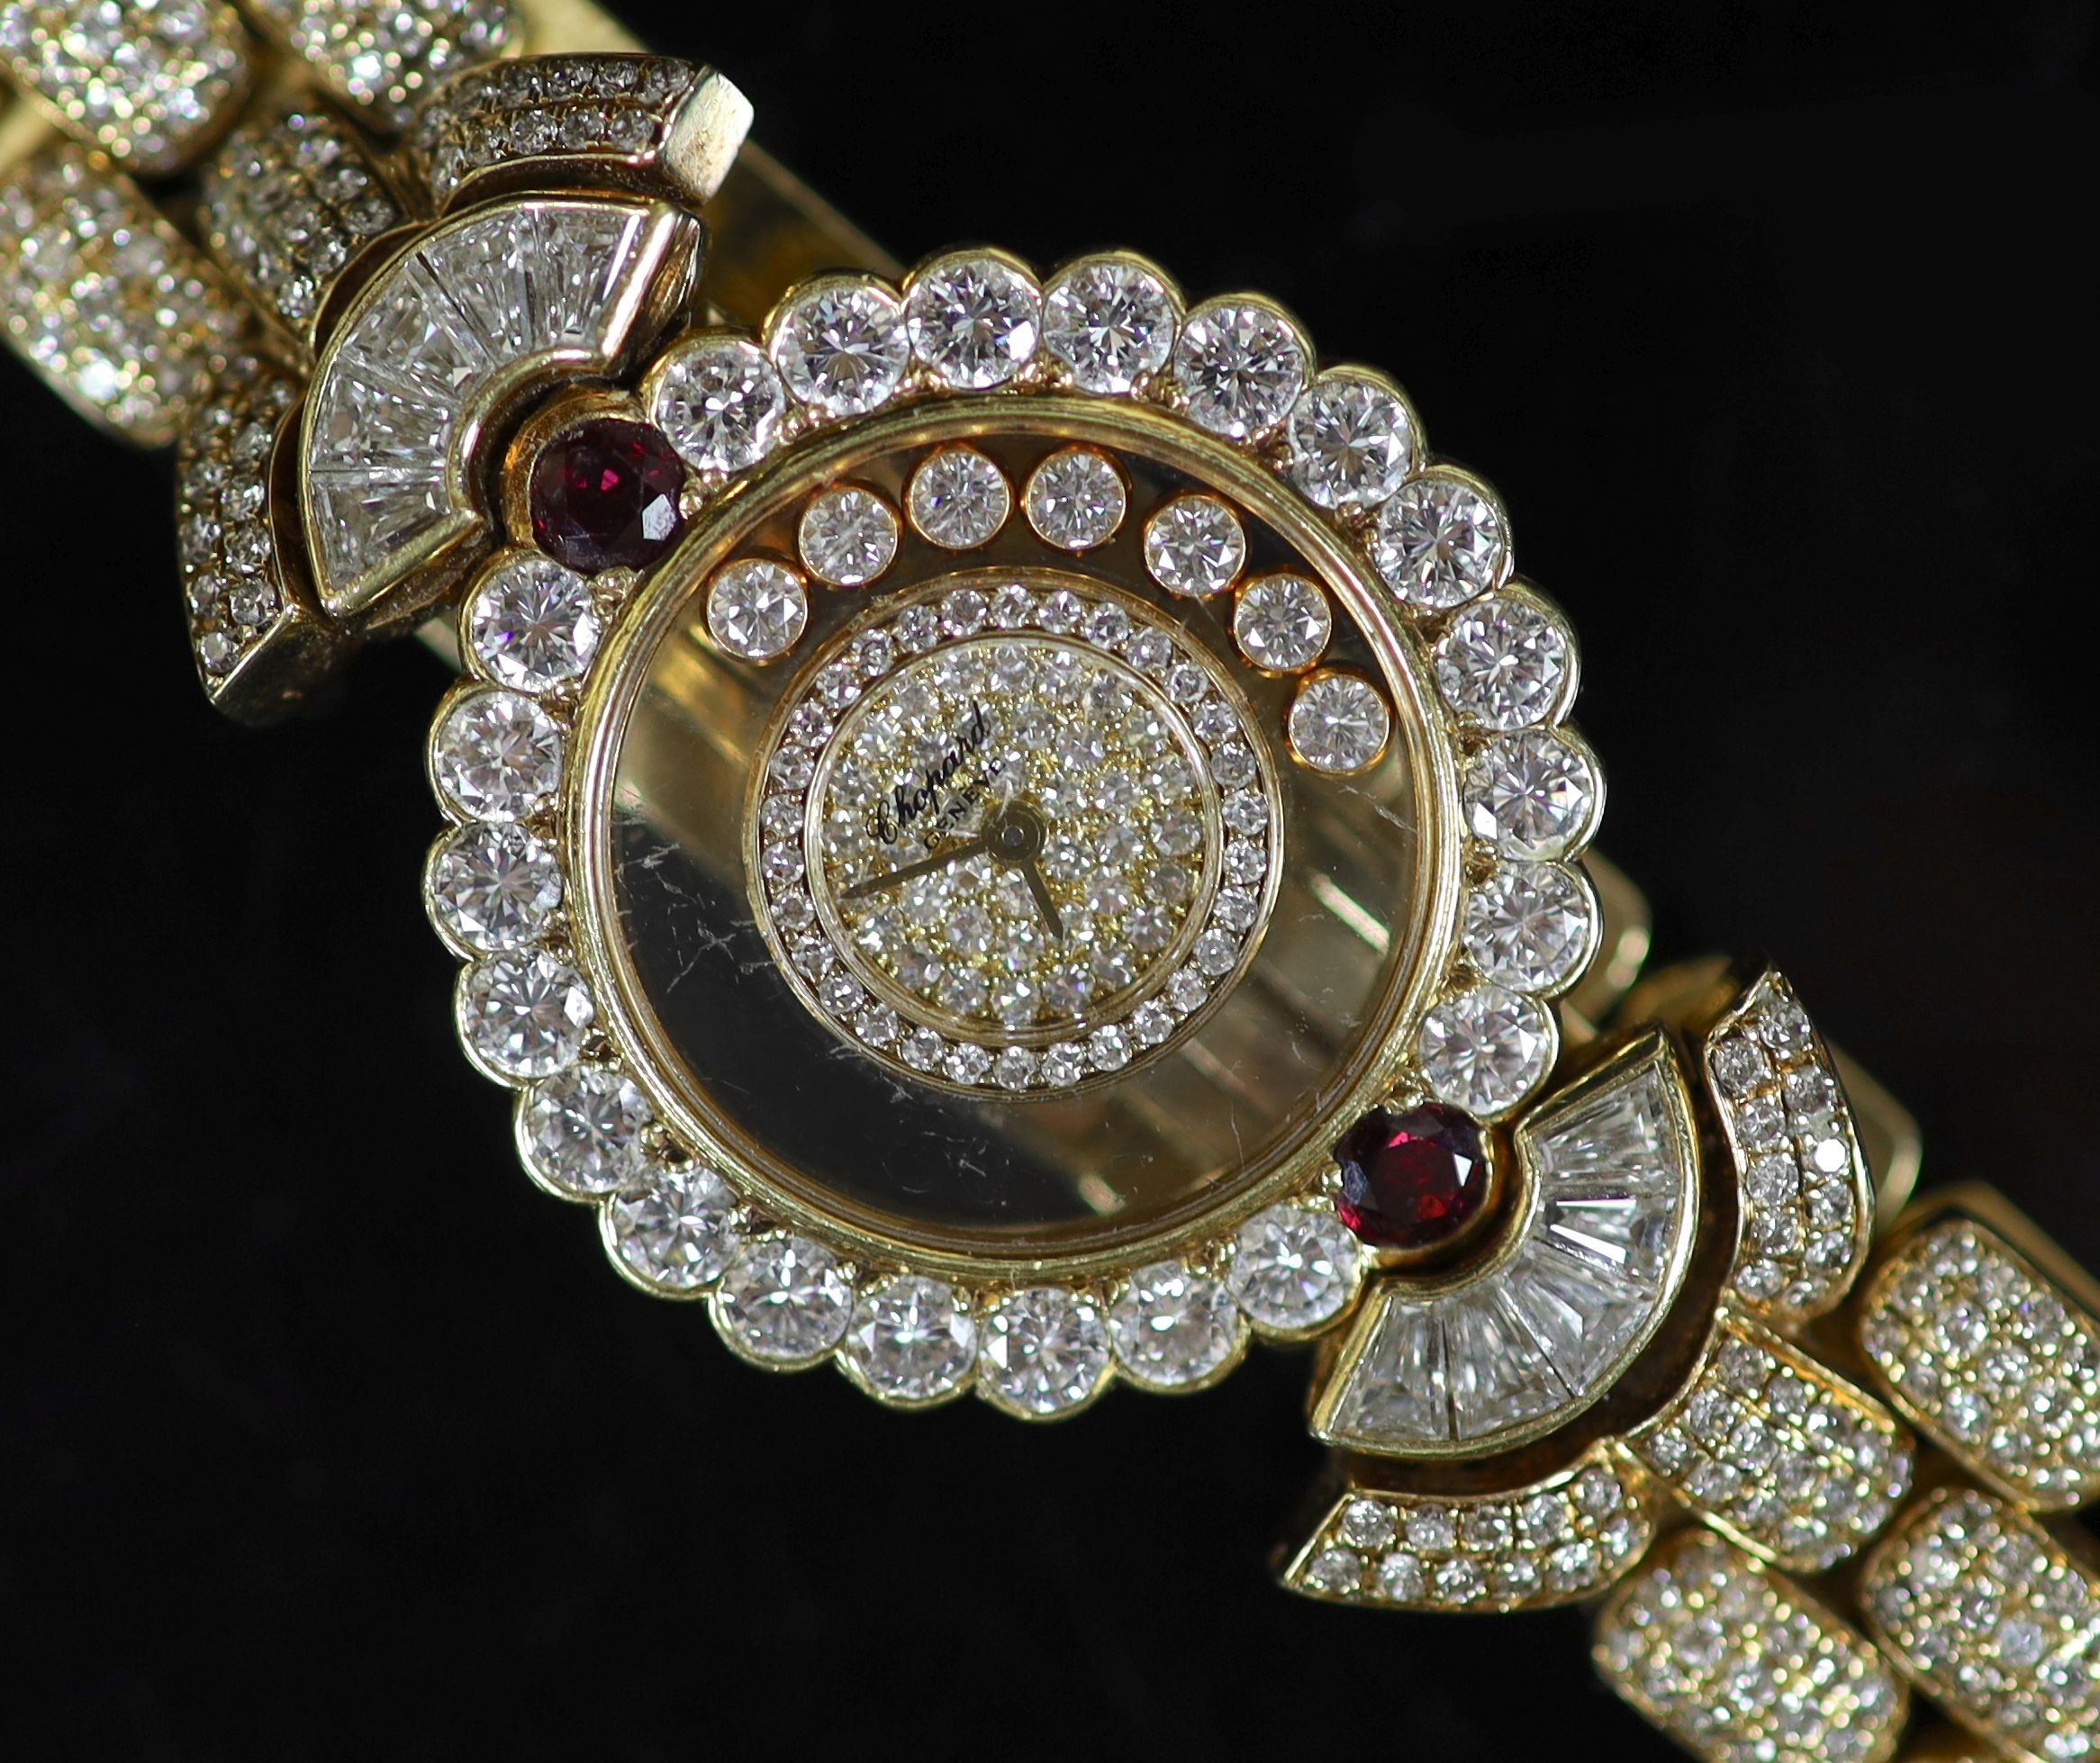 A lady's Chopard 'Happy Diamonds' 18ct gold, ruby and diamond encrusted dress wrist watch                                                                                                                                   